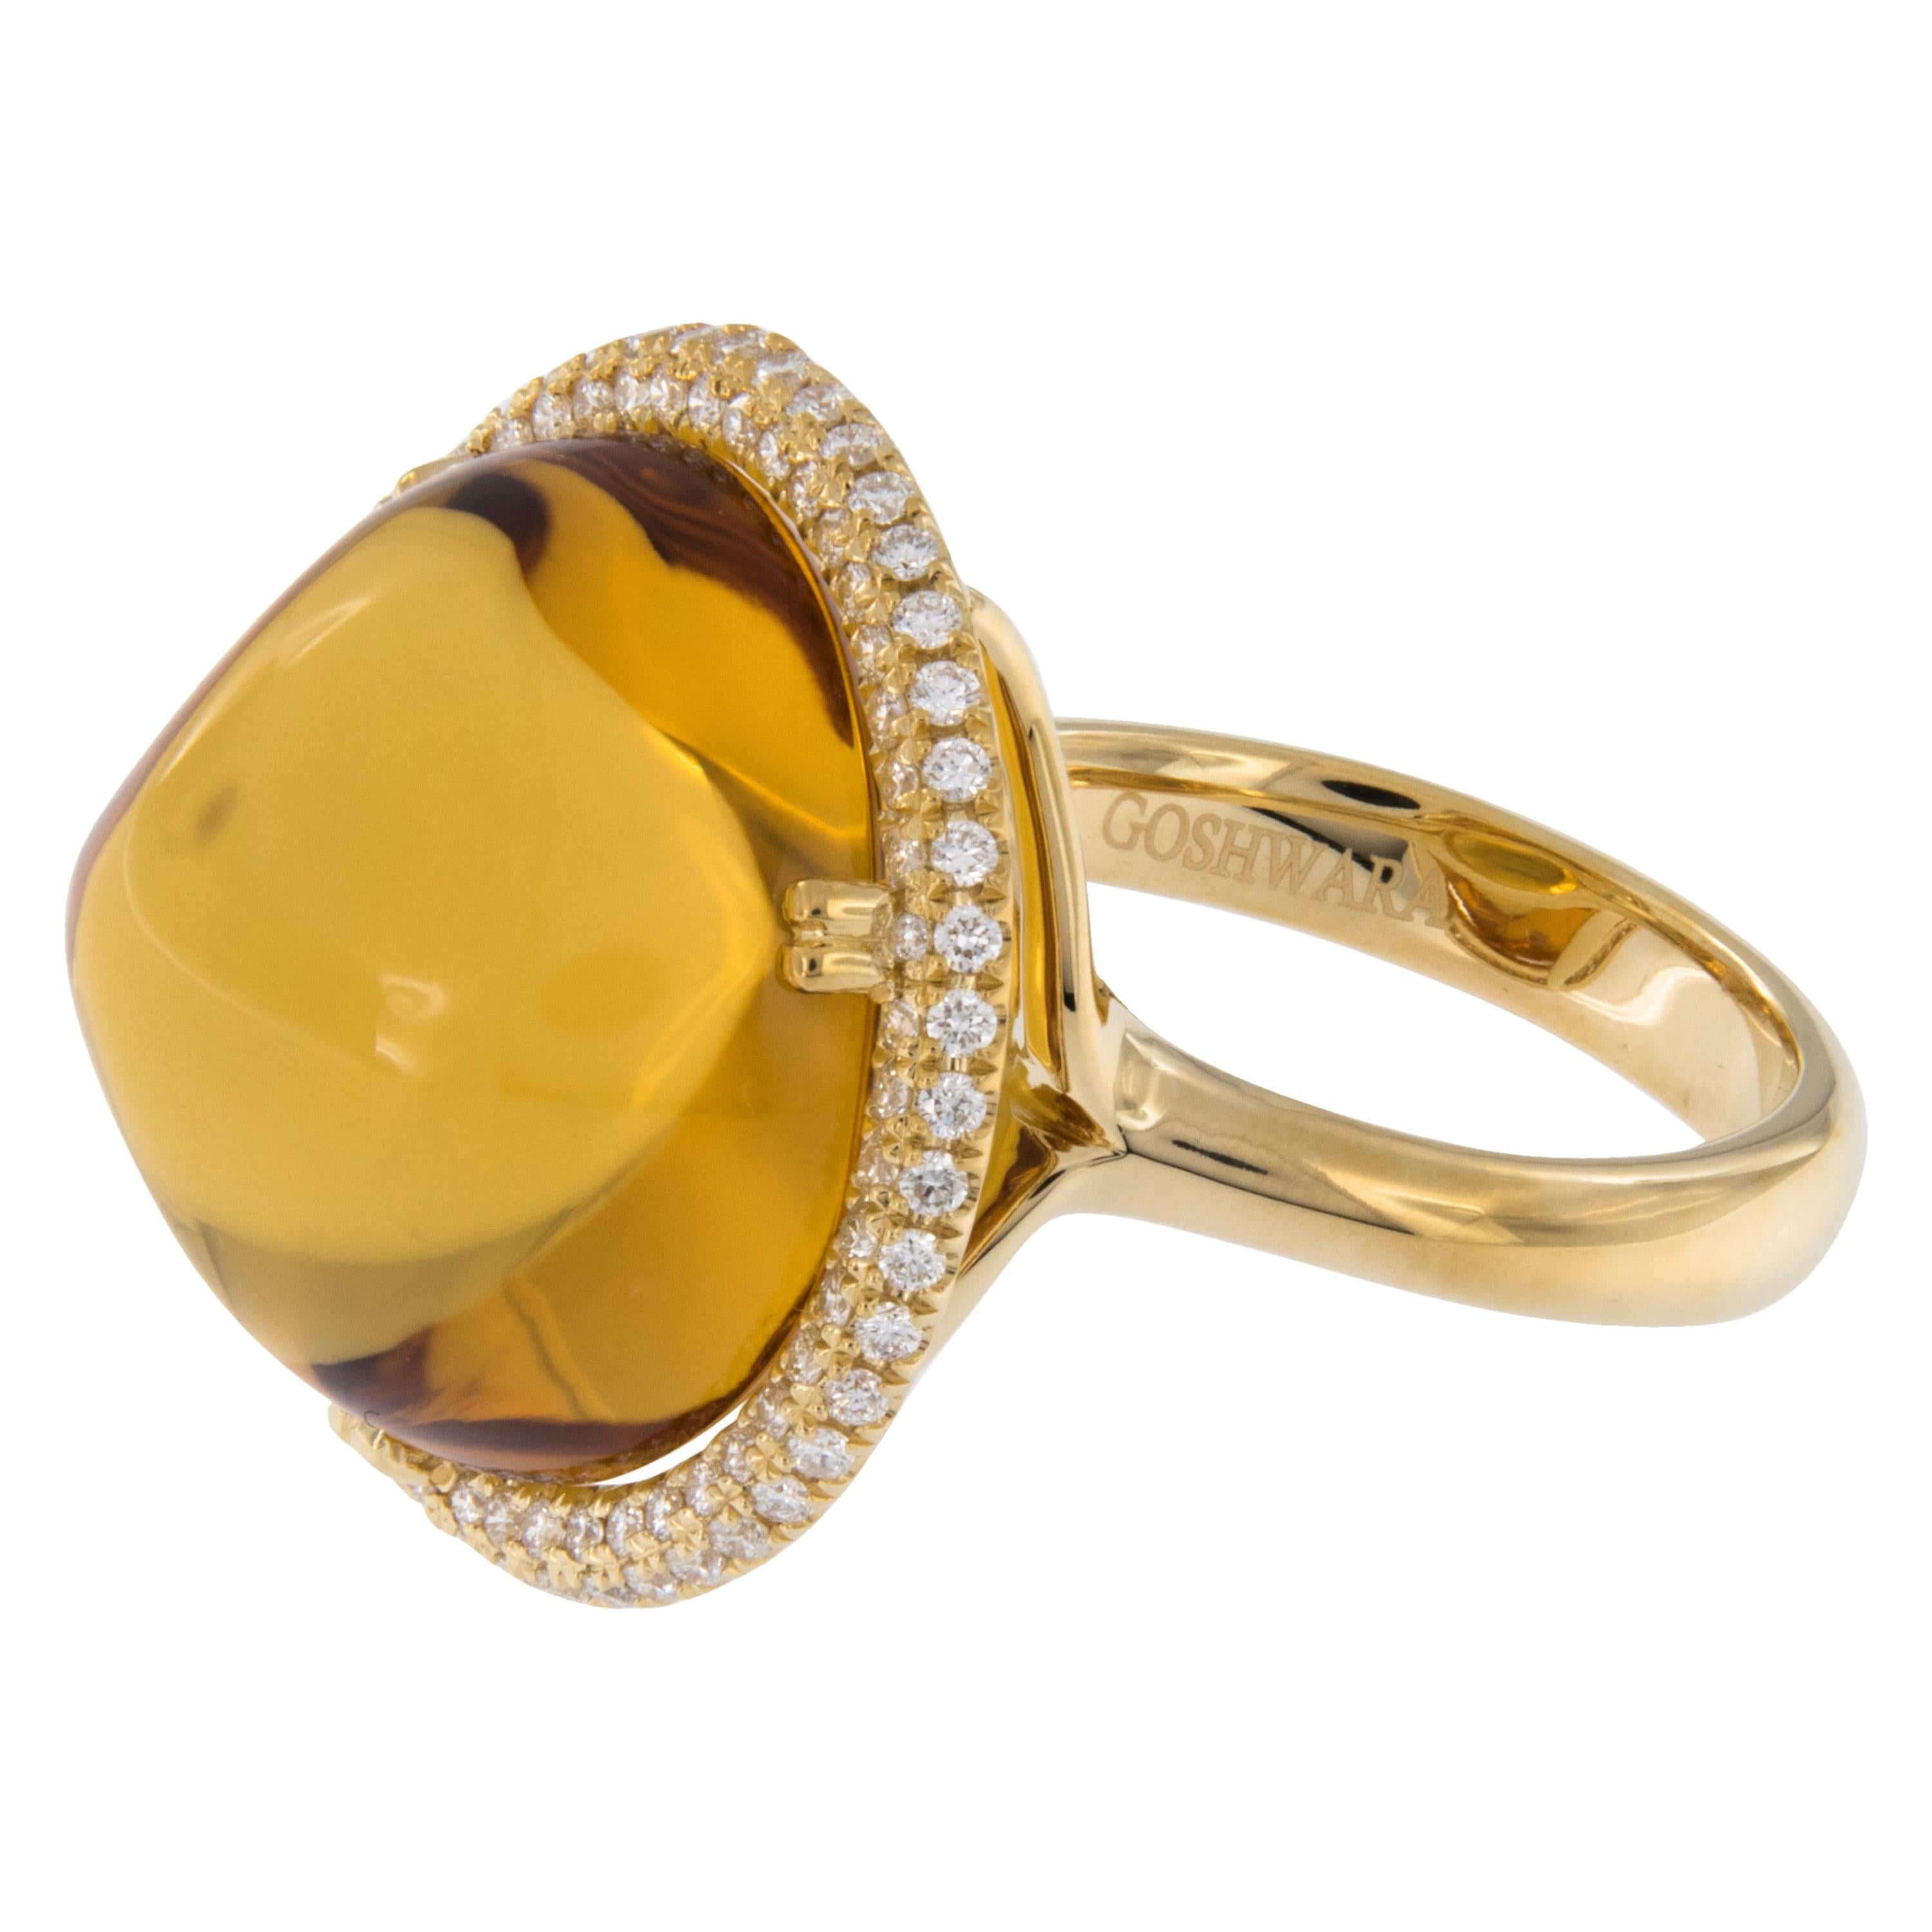 Goshwara Rock N Roll Gold Citrine and Diamond Ring